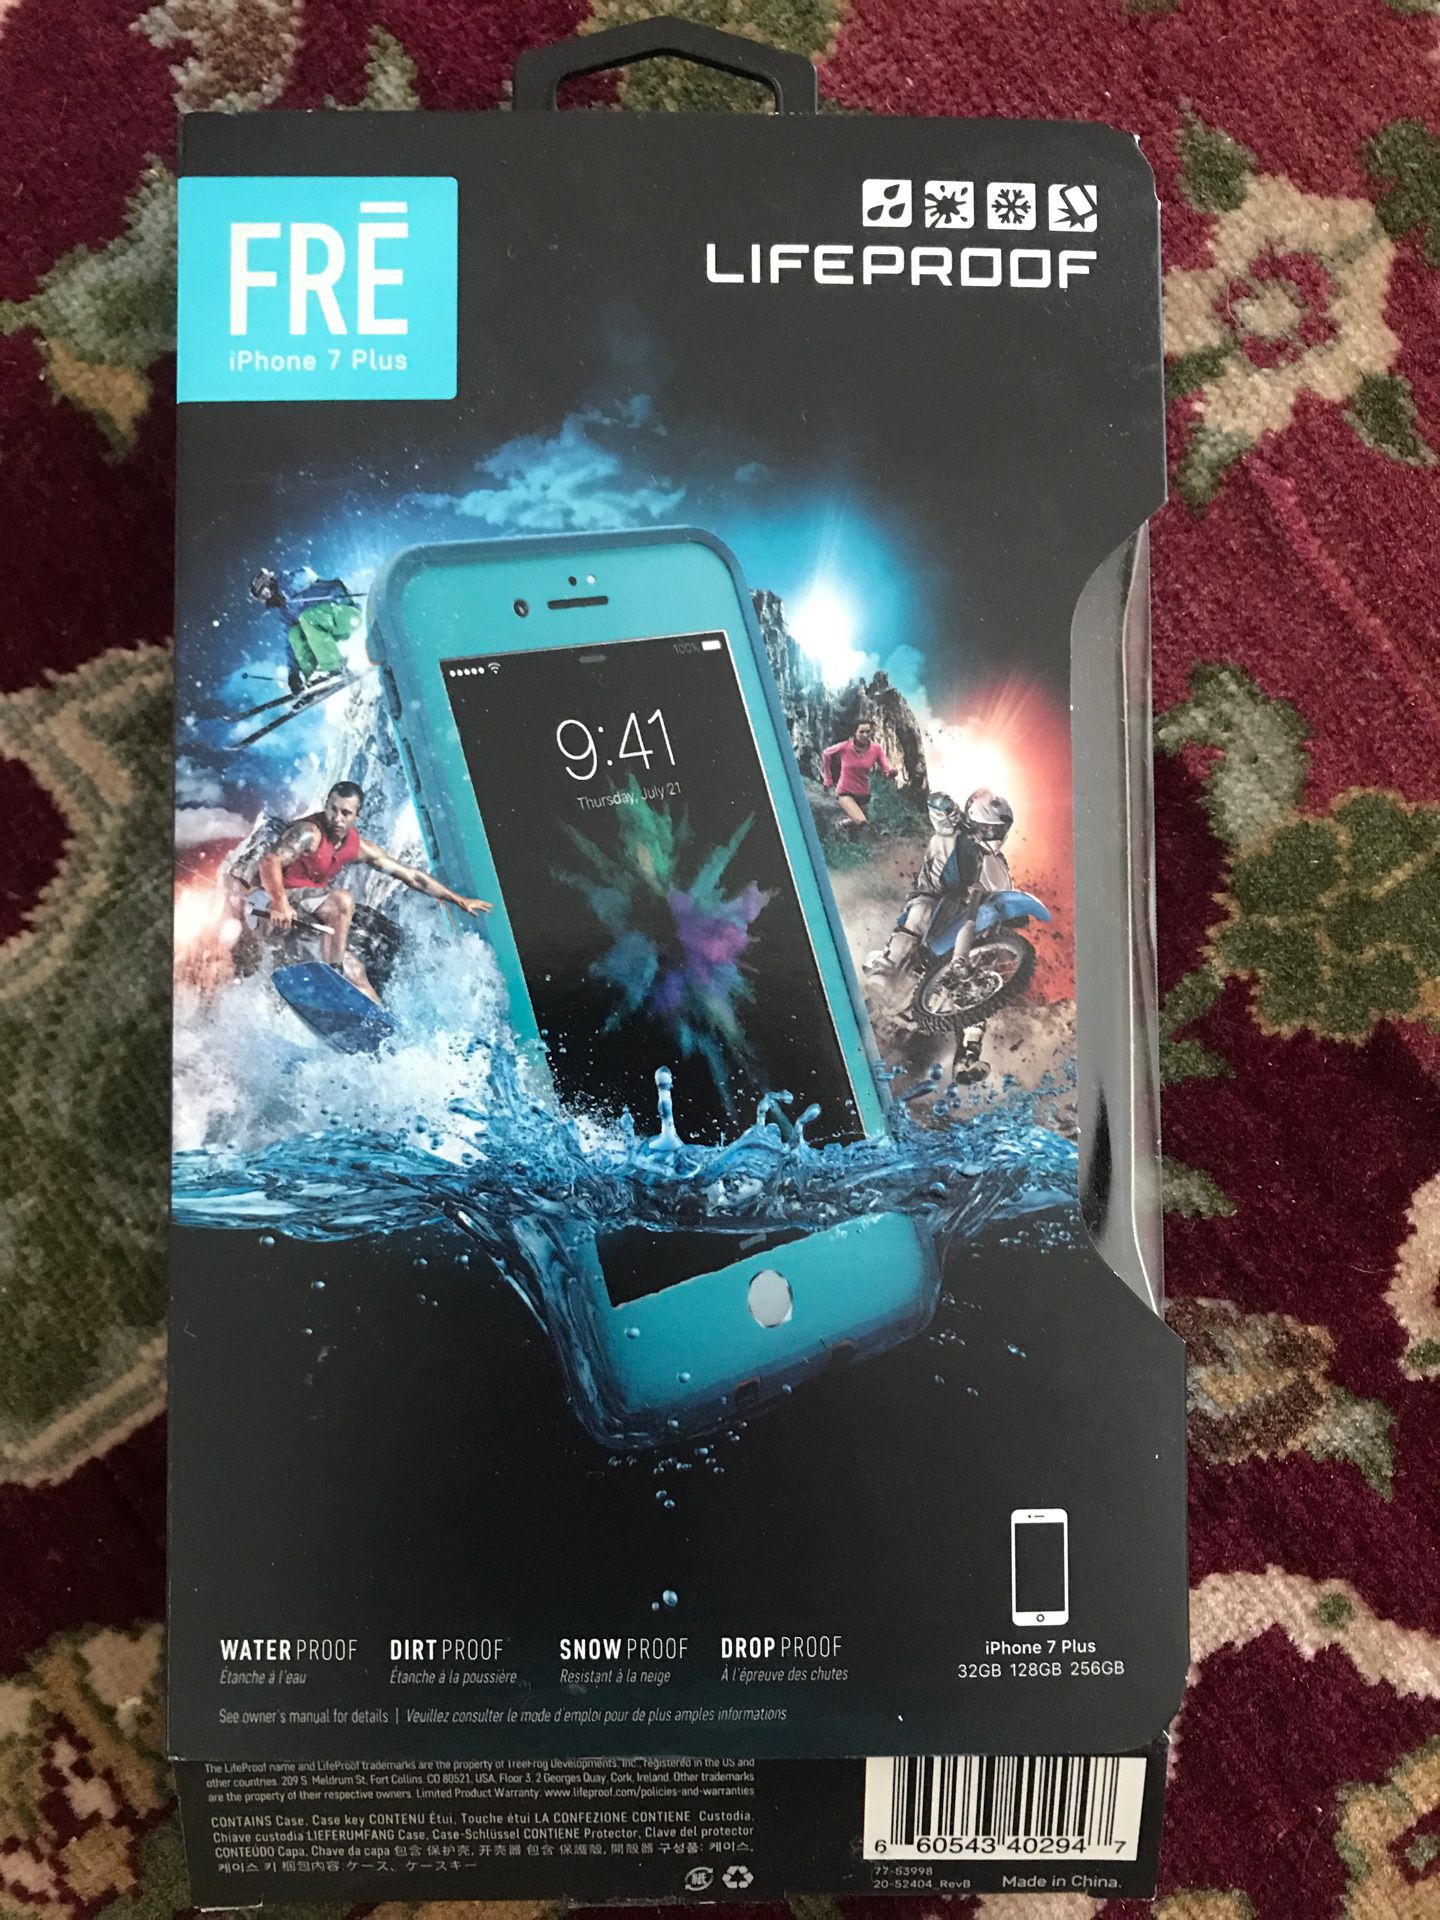 FRE iPhone 7 Plus case / lifeproof